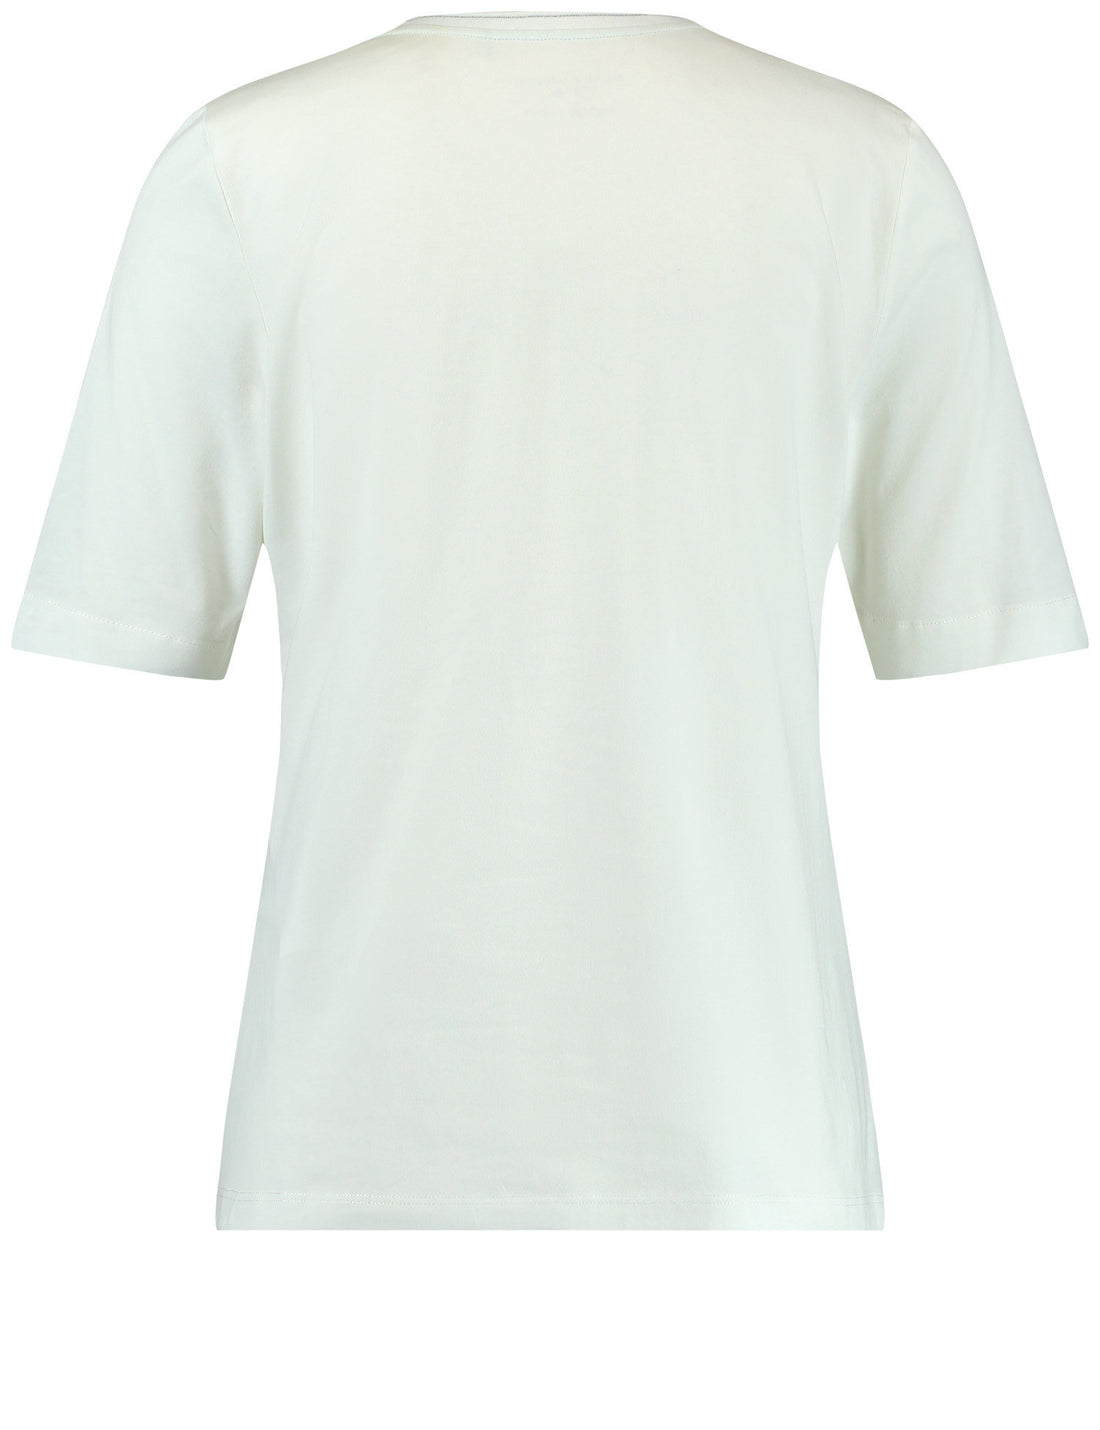 Short Sleeve Graphic T-Shirt_170169-44115_99700_02